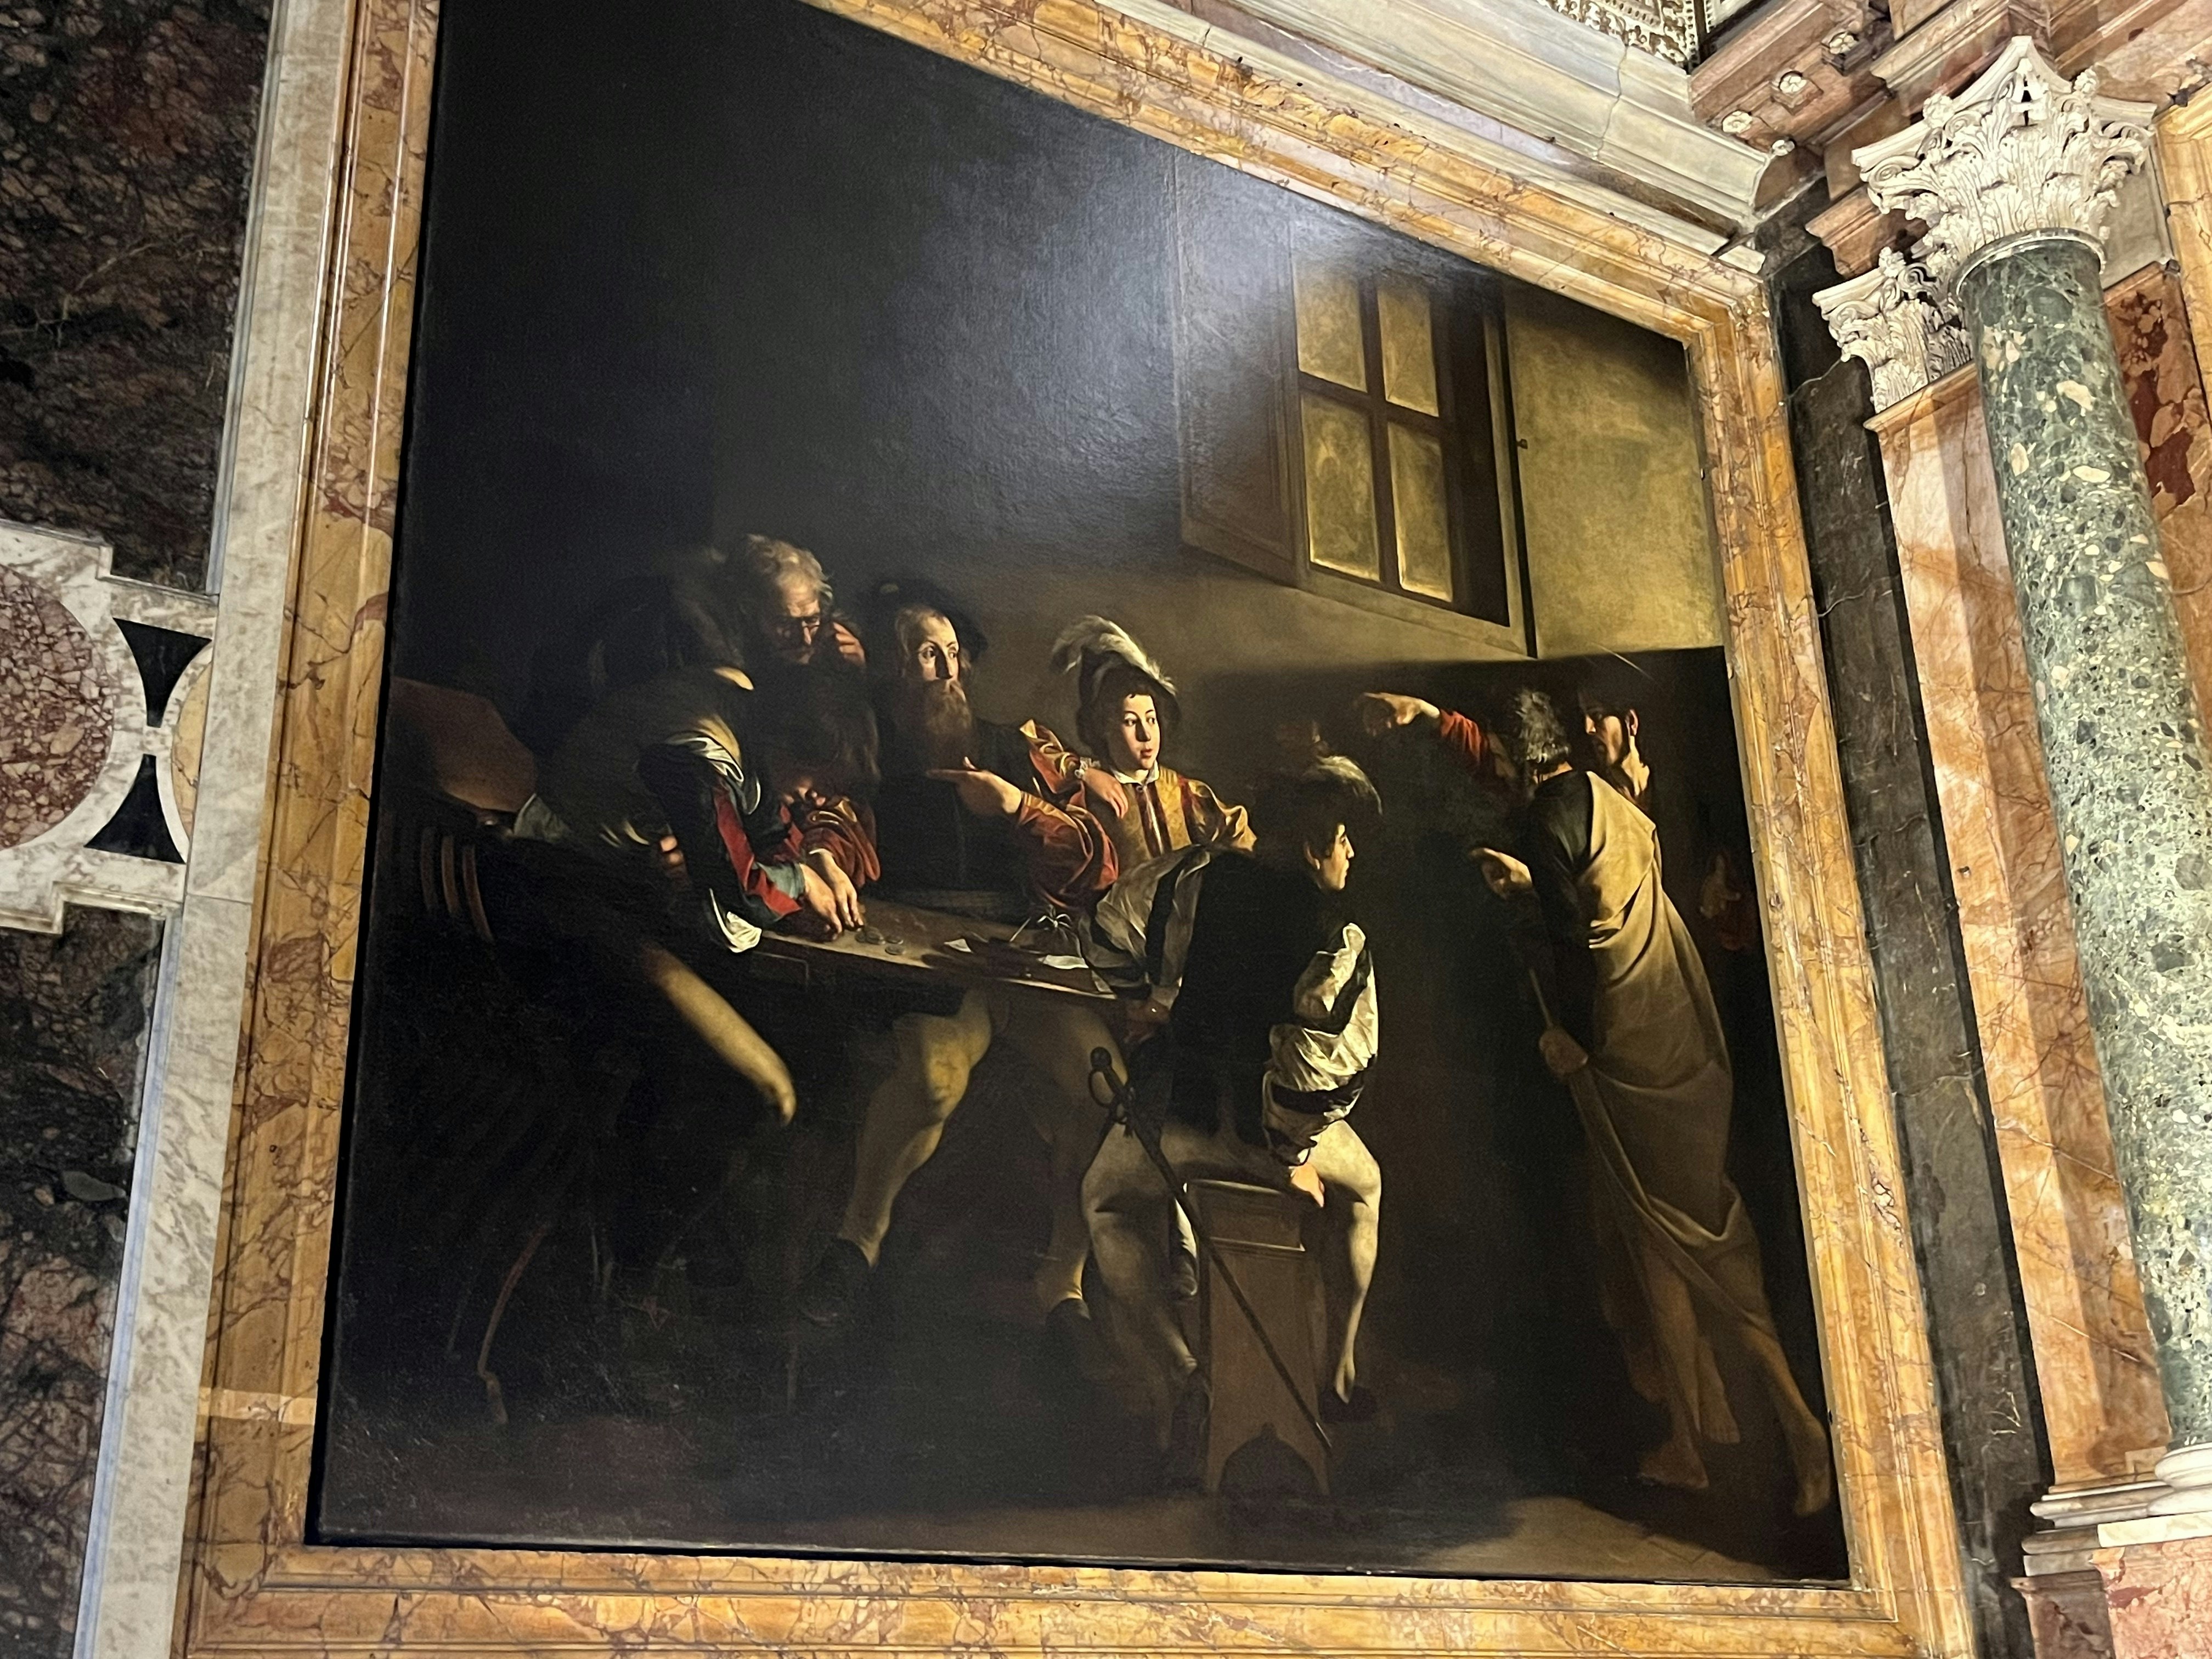 Caravaggio's "The Calling of Saint Matthew" inside the San Luigi dei Francesi